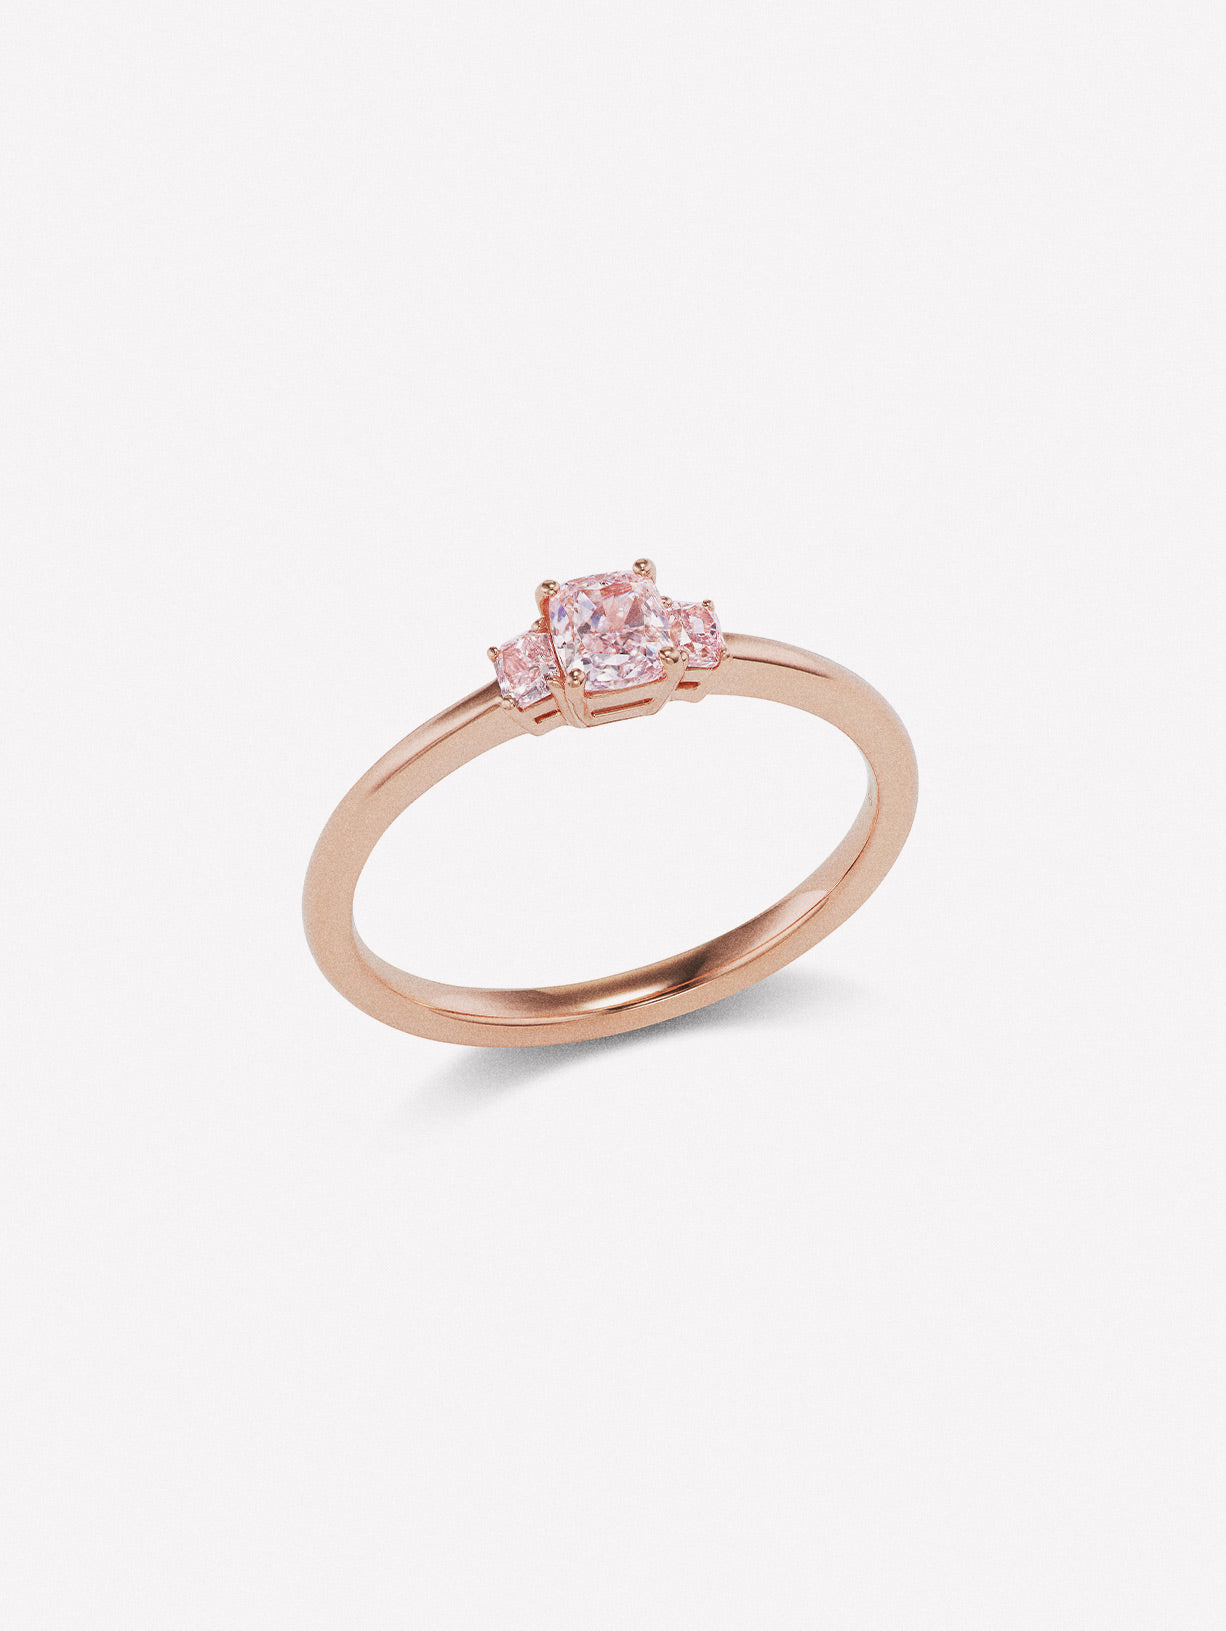 Pink Diamond Stackable Three Stone Ring - Pink Diamonds, J FINE - J Fine, Rings - Pink Diamond Jewelry, pink-diamond-stackable-three-stone-ring-by-j-fine - Argyle Pink Diamonds